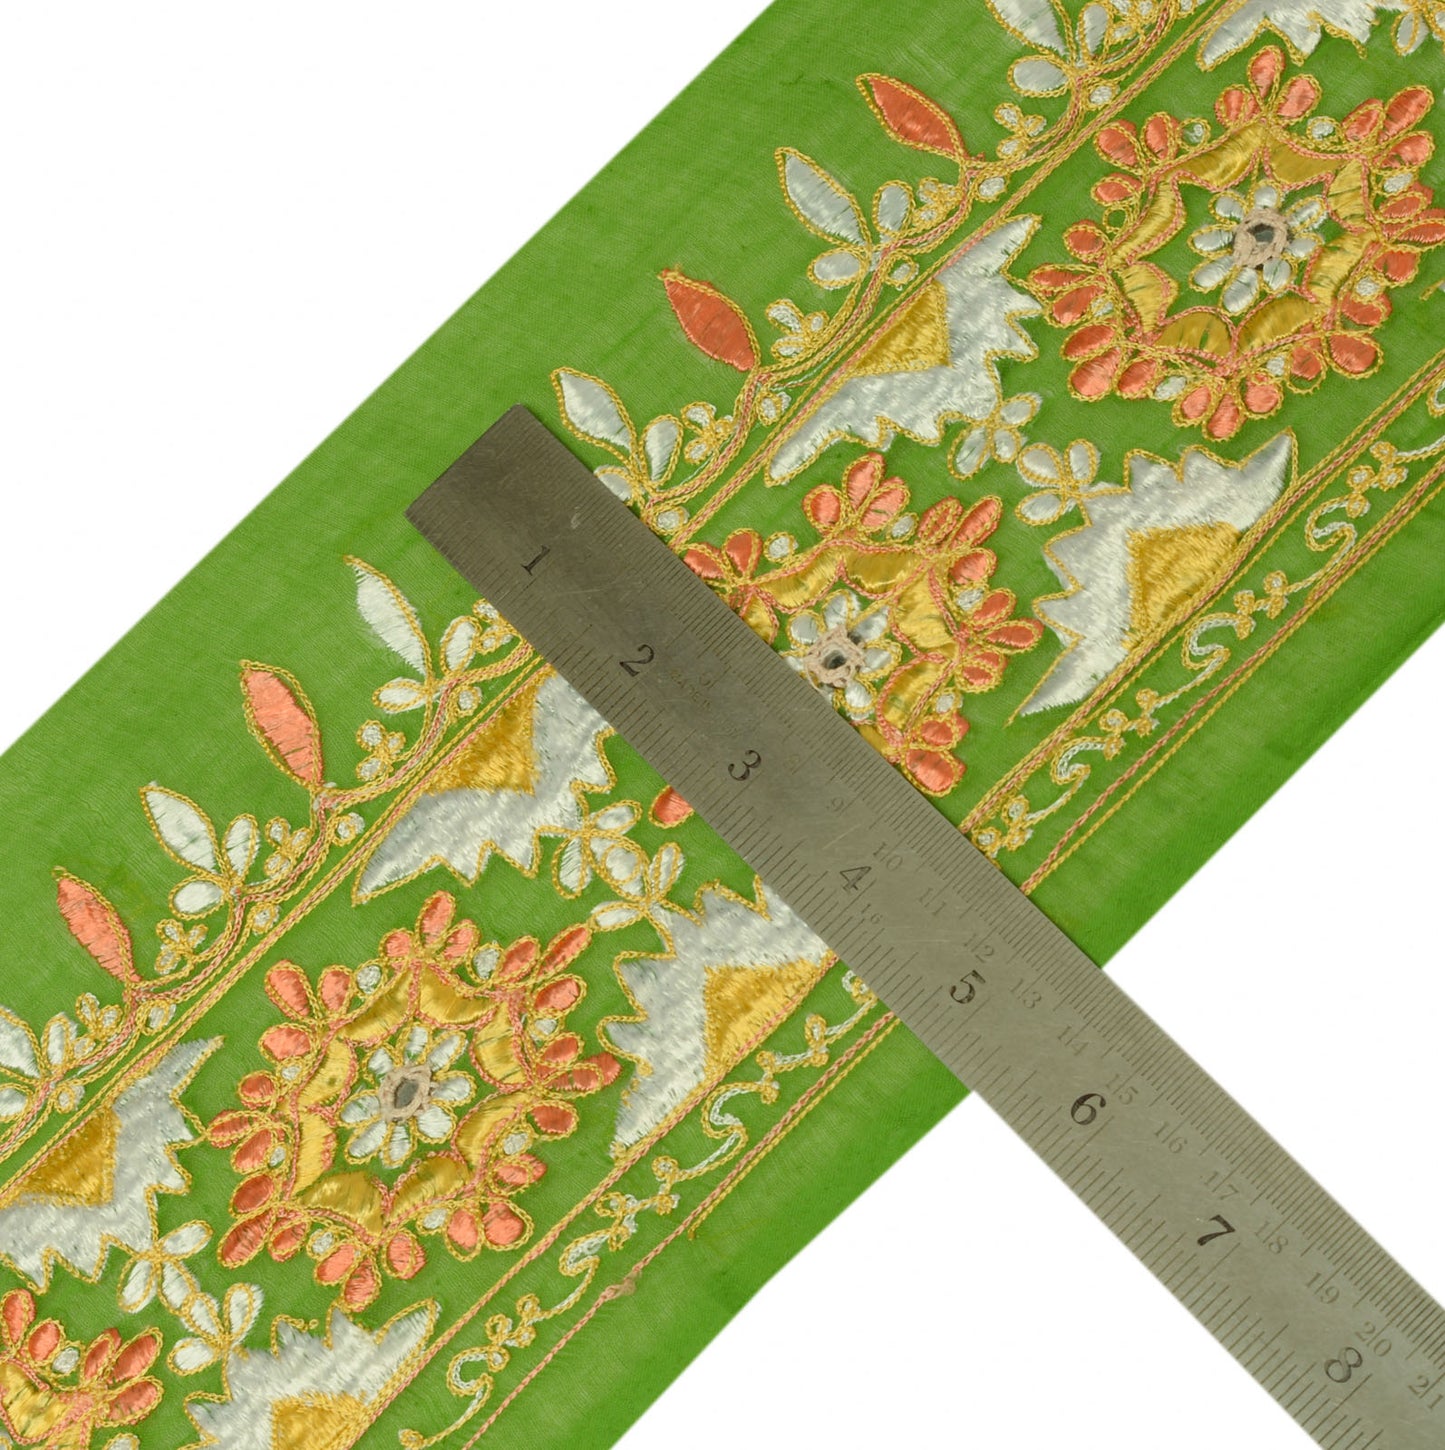 Sushila Vintage Green Sari Border Indian Craft Sewing Trim Embroidered Lace